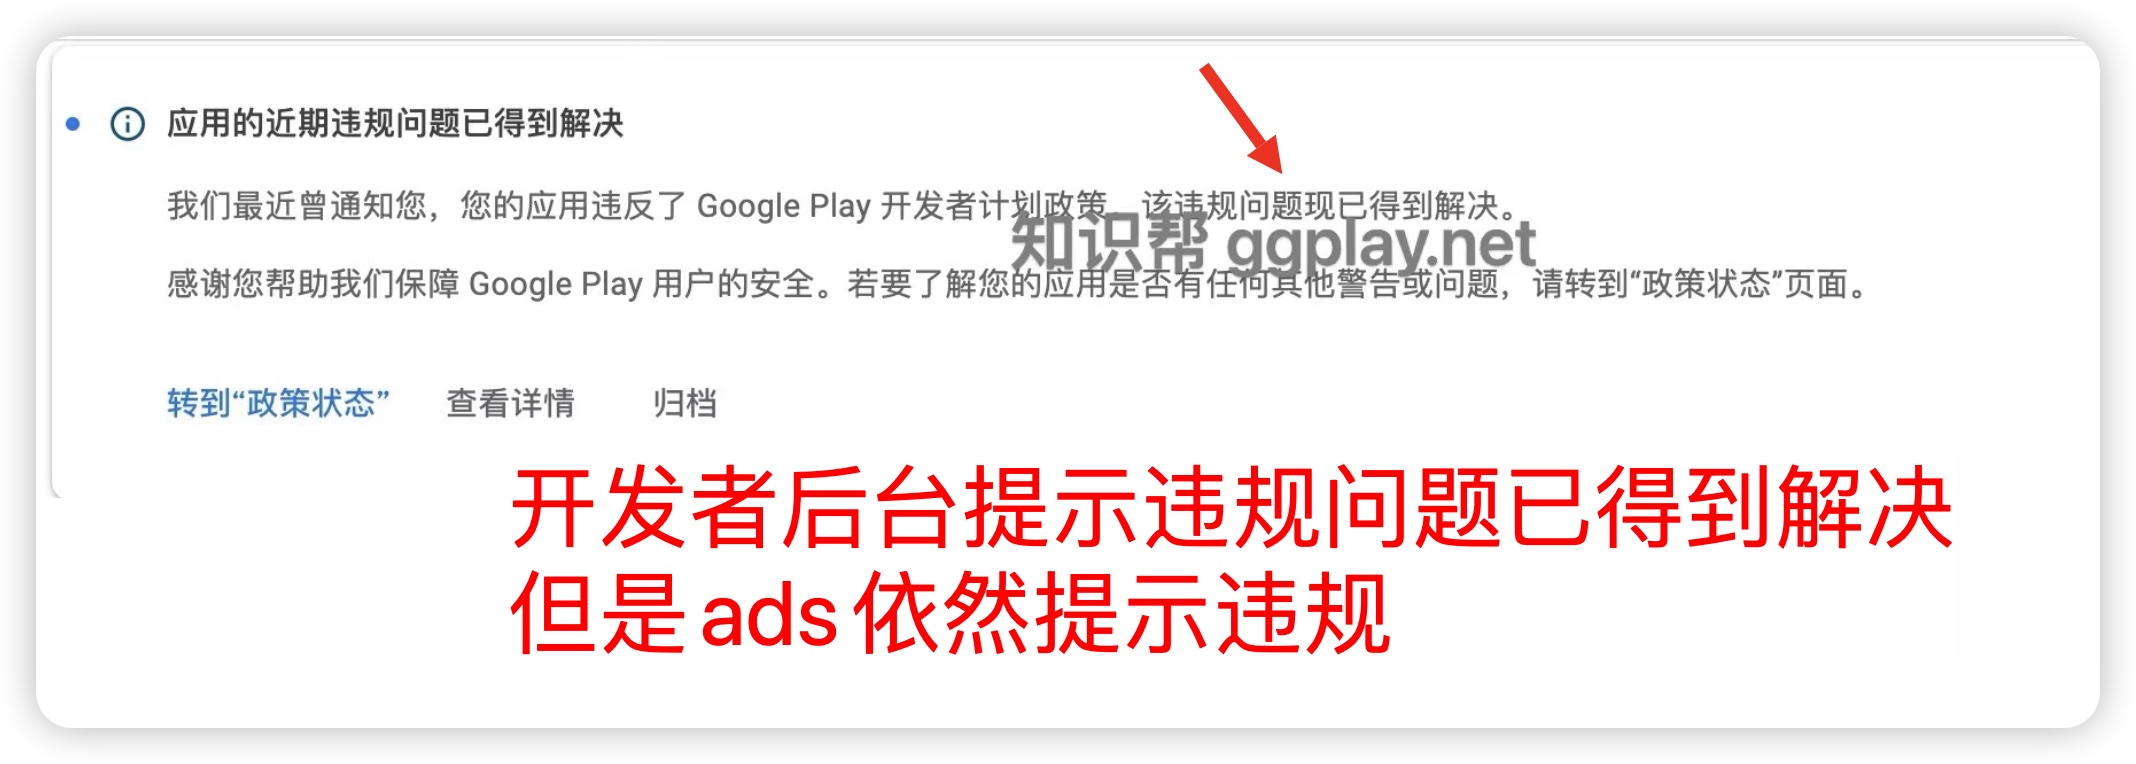 Google play产品内容违规修复后导致ads广告被限制的案例 - 知识帮